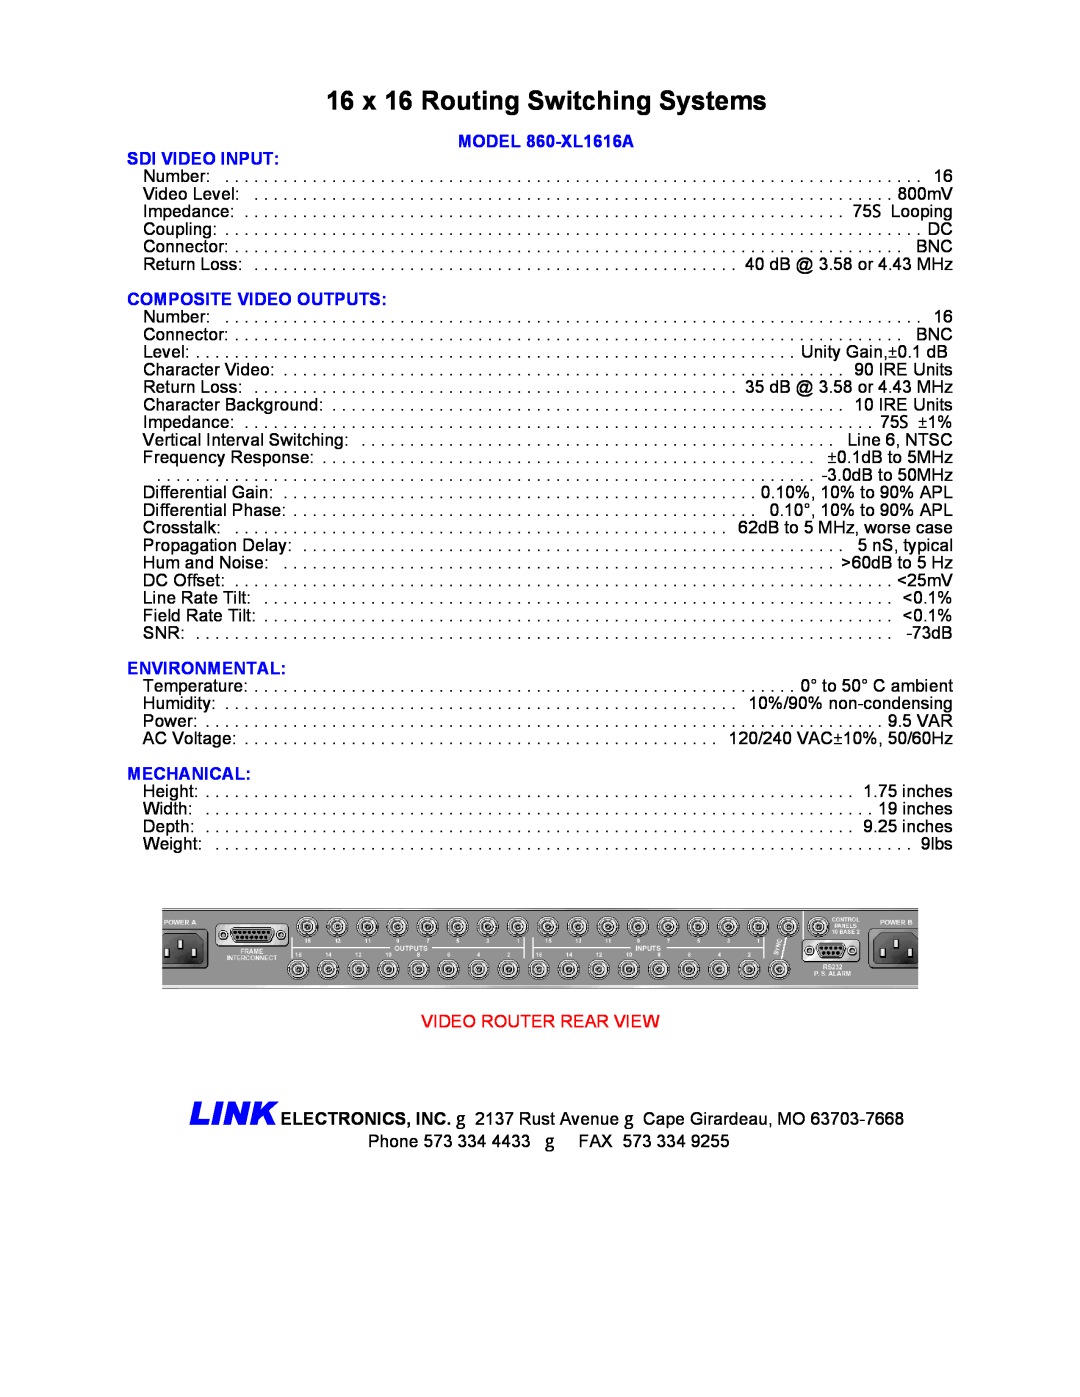 Link electronic manual MODEL 860-XL1616A SDI VIDEO INPUT, Composite Video Outputs, Environmental, Mechanical 